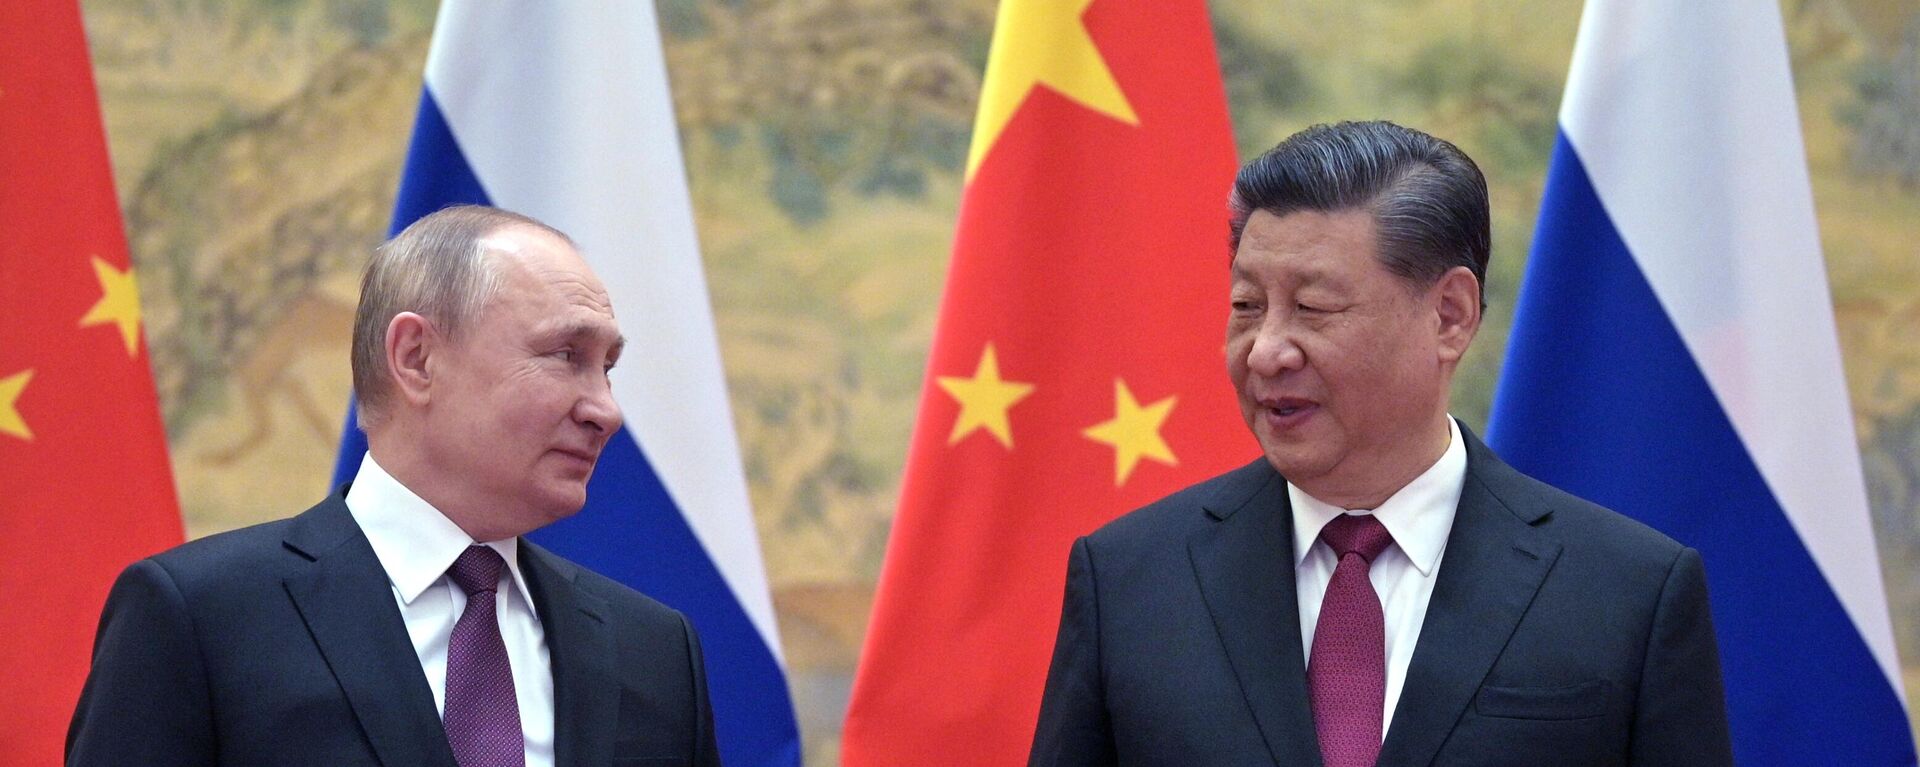 Russian President Vladimir Putin, left, and Chinese President Xi Jinping pose during their meeting at the Diaoyutai State Guesthouse in Beijing, China. - Sputnik International, 1920, 20.03.2023